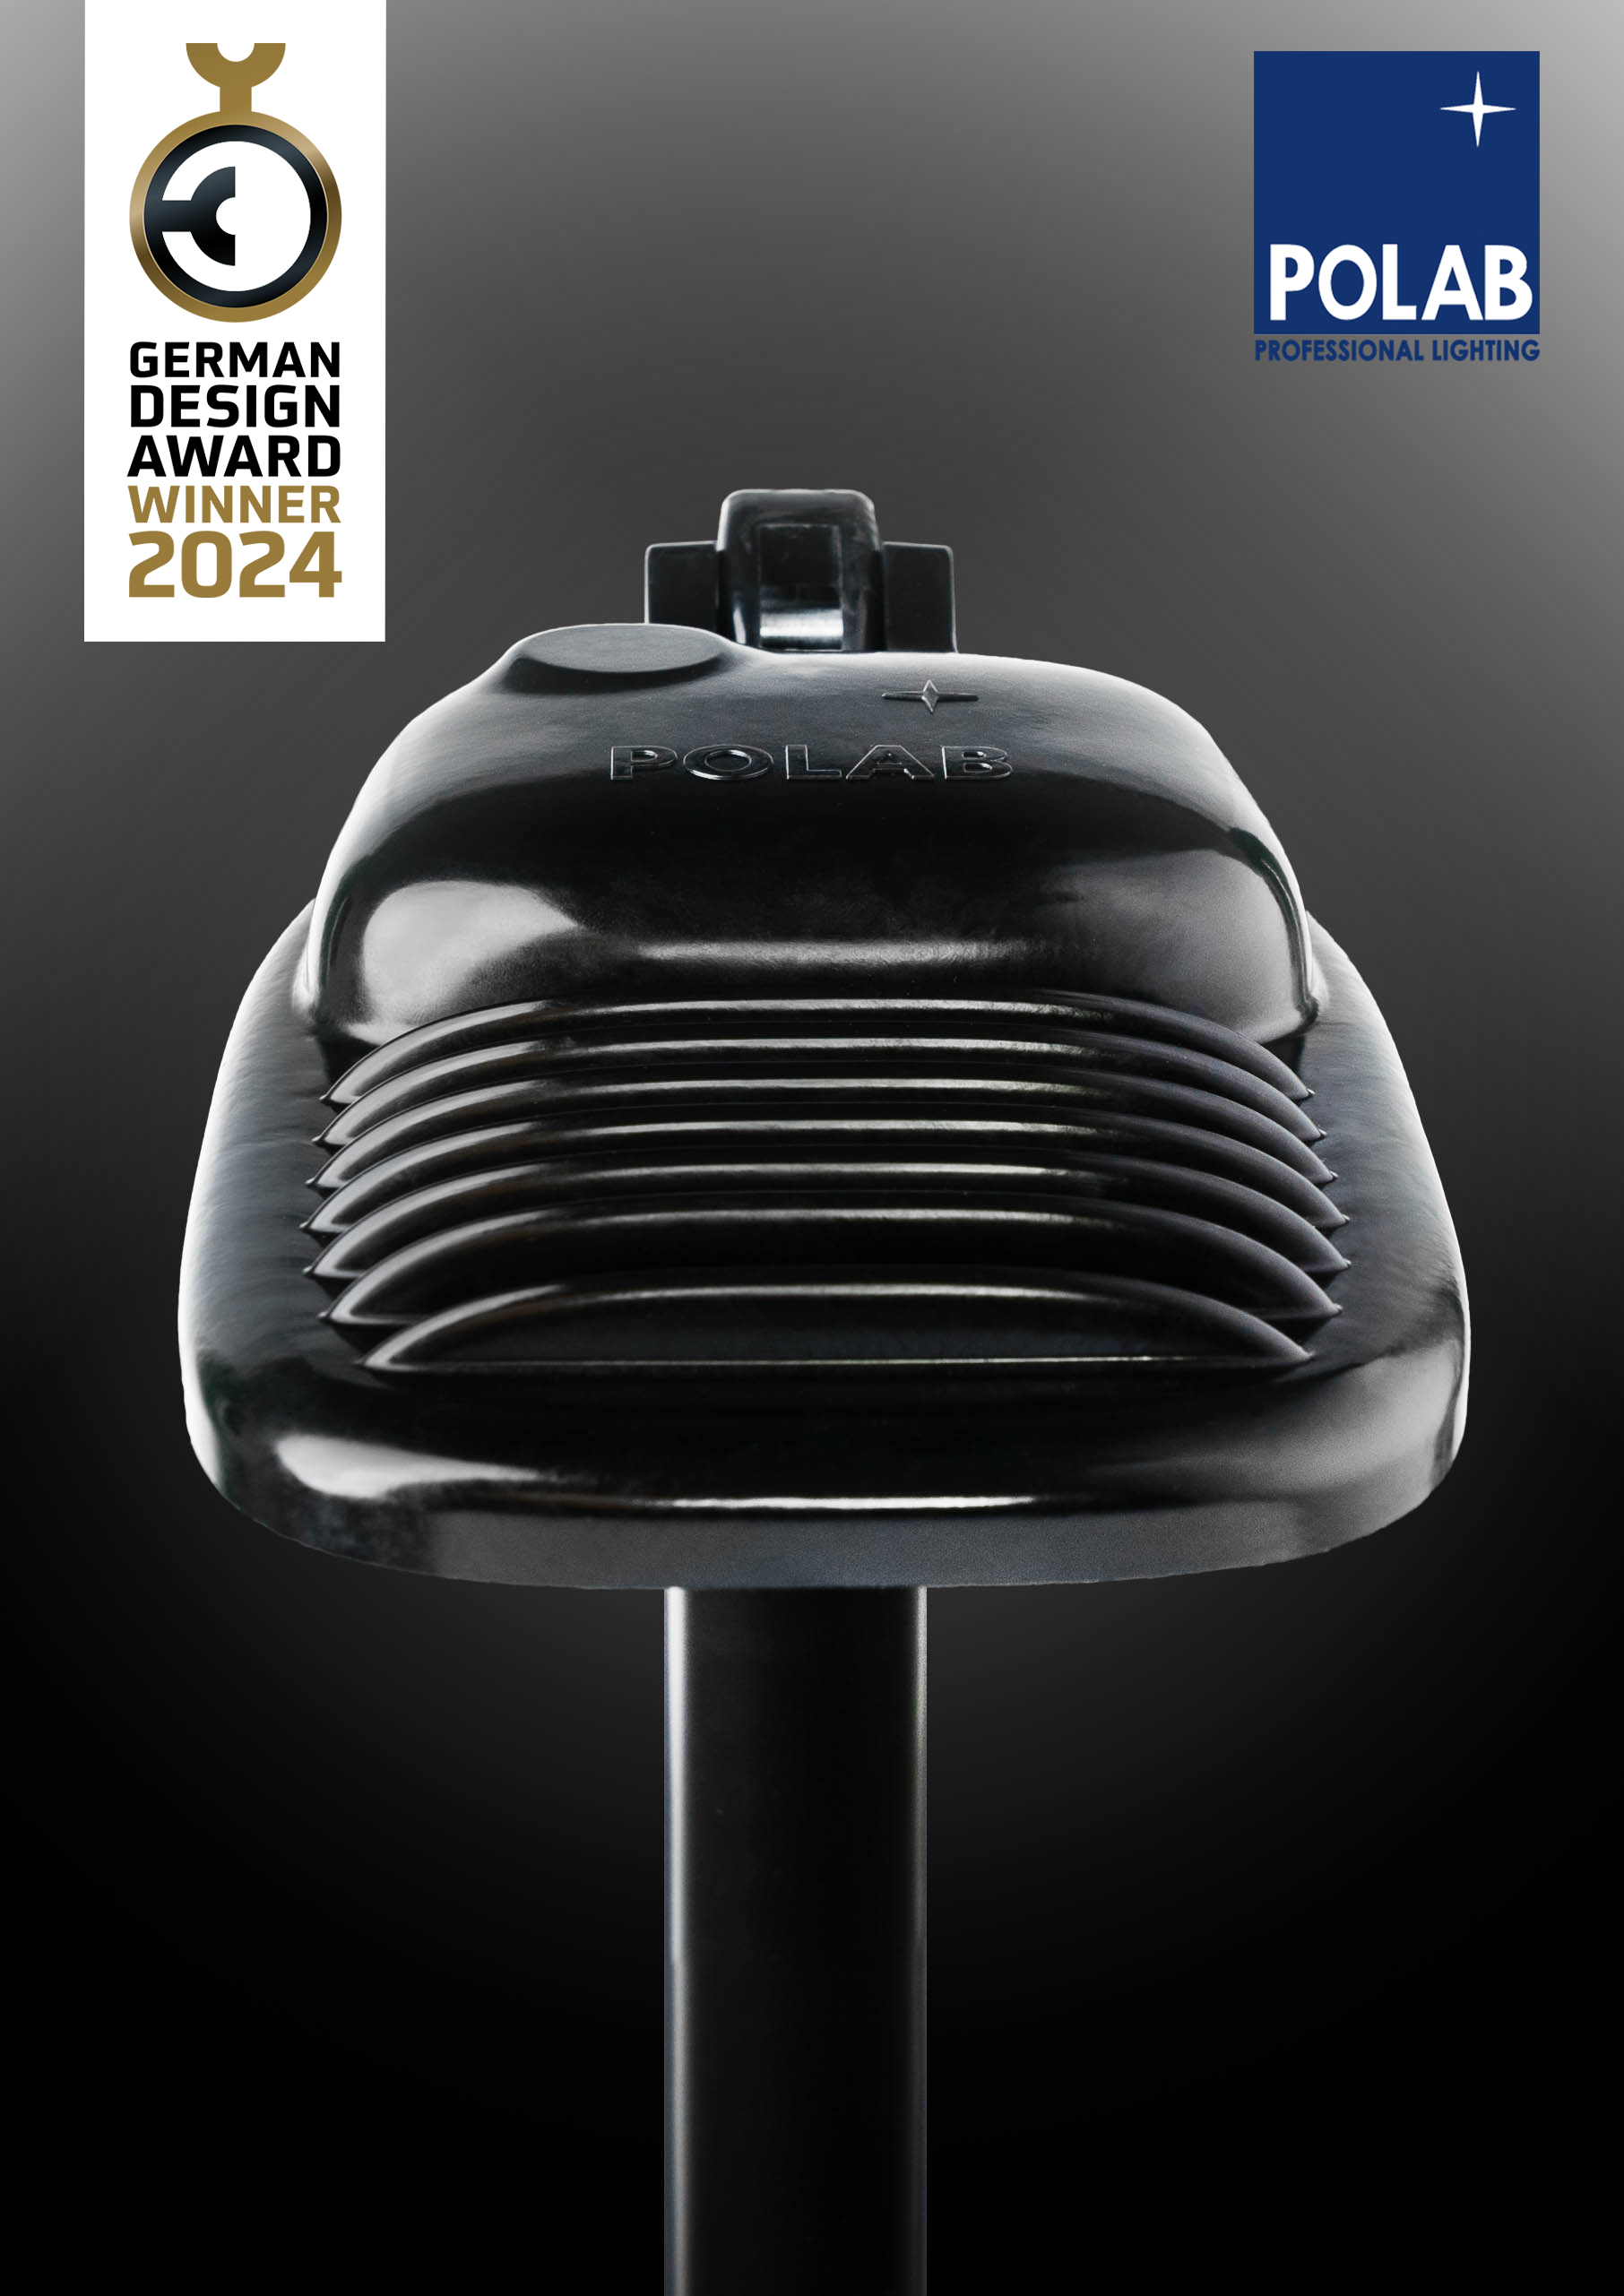 German Design Award WINNER 2024